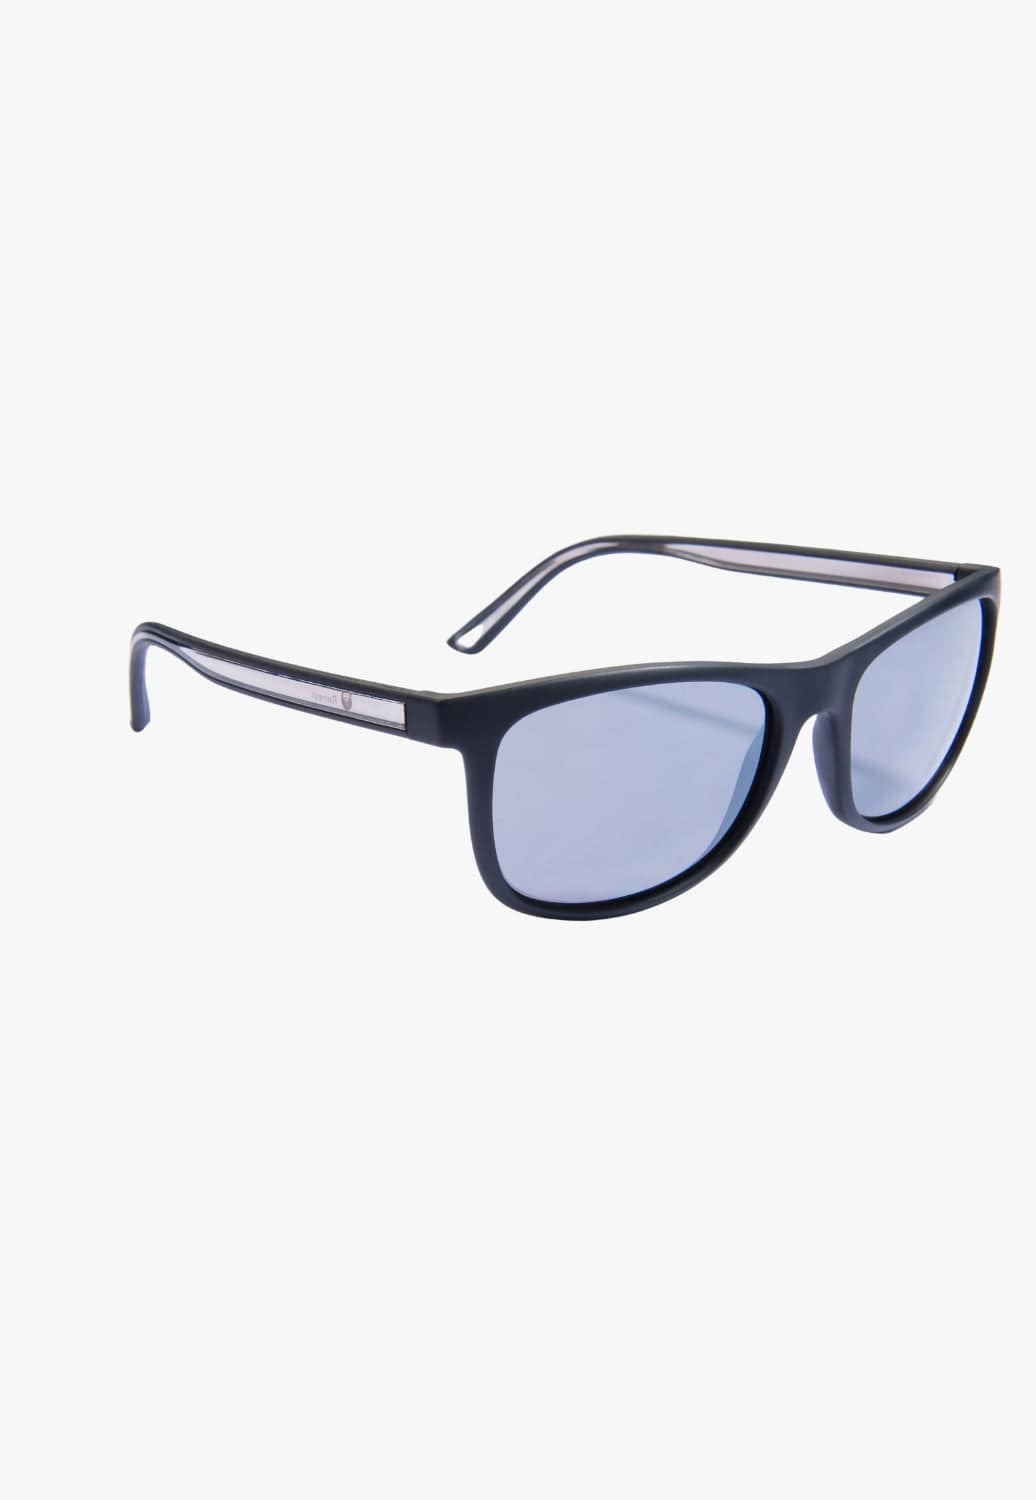 Gidgee Eyes ACCESSORIES-Sunglasses Black Gidgee Eyes Fender Sunglasses